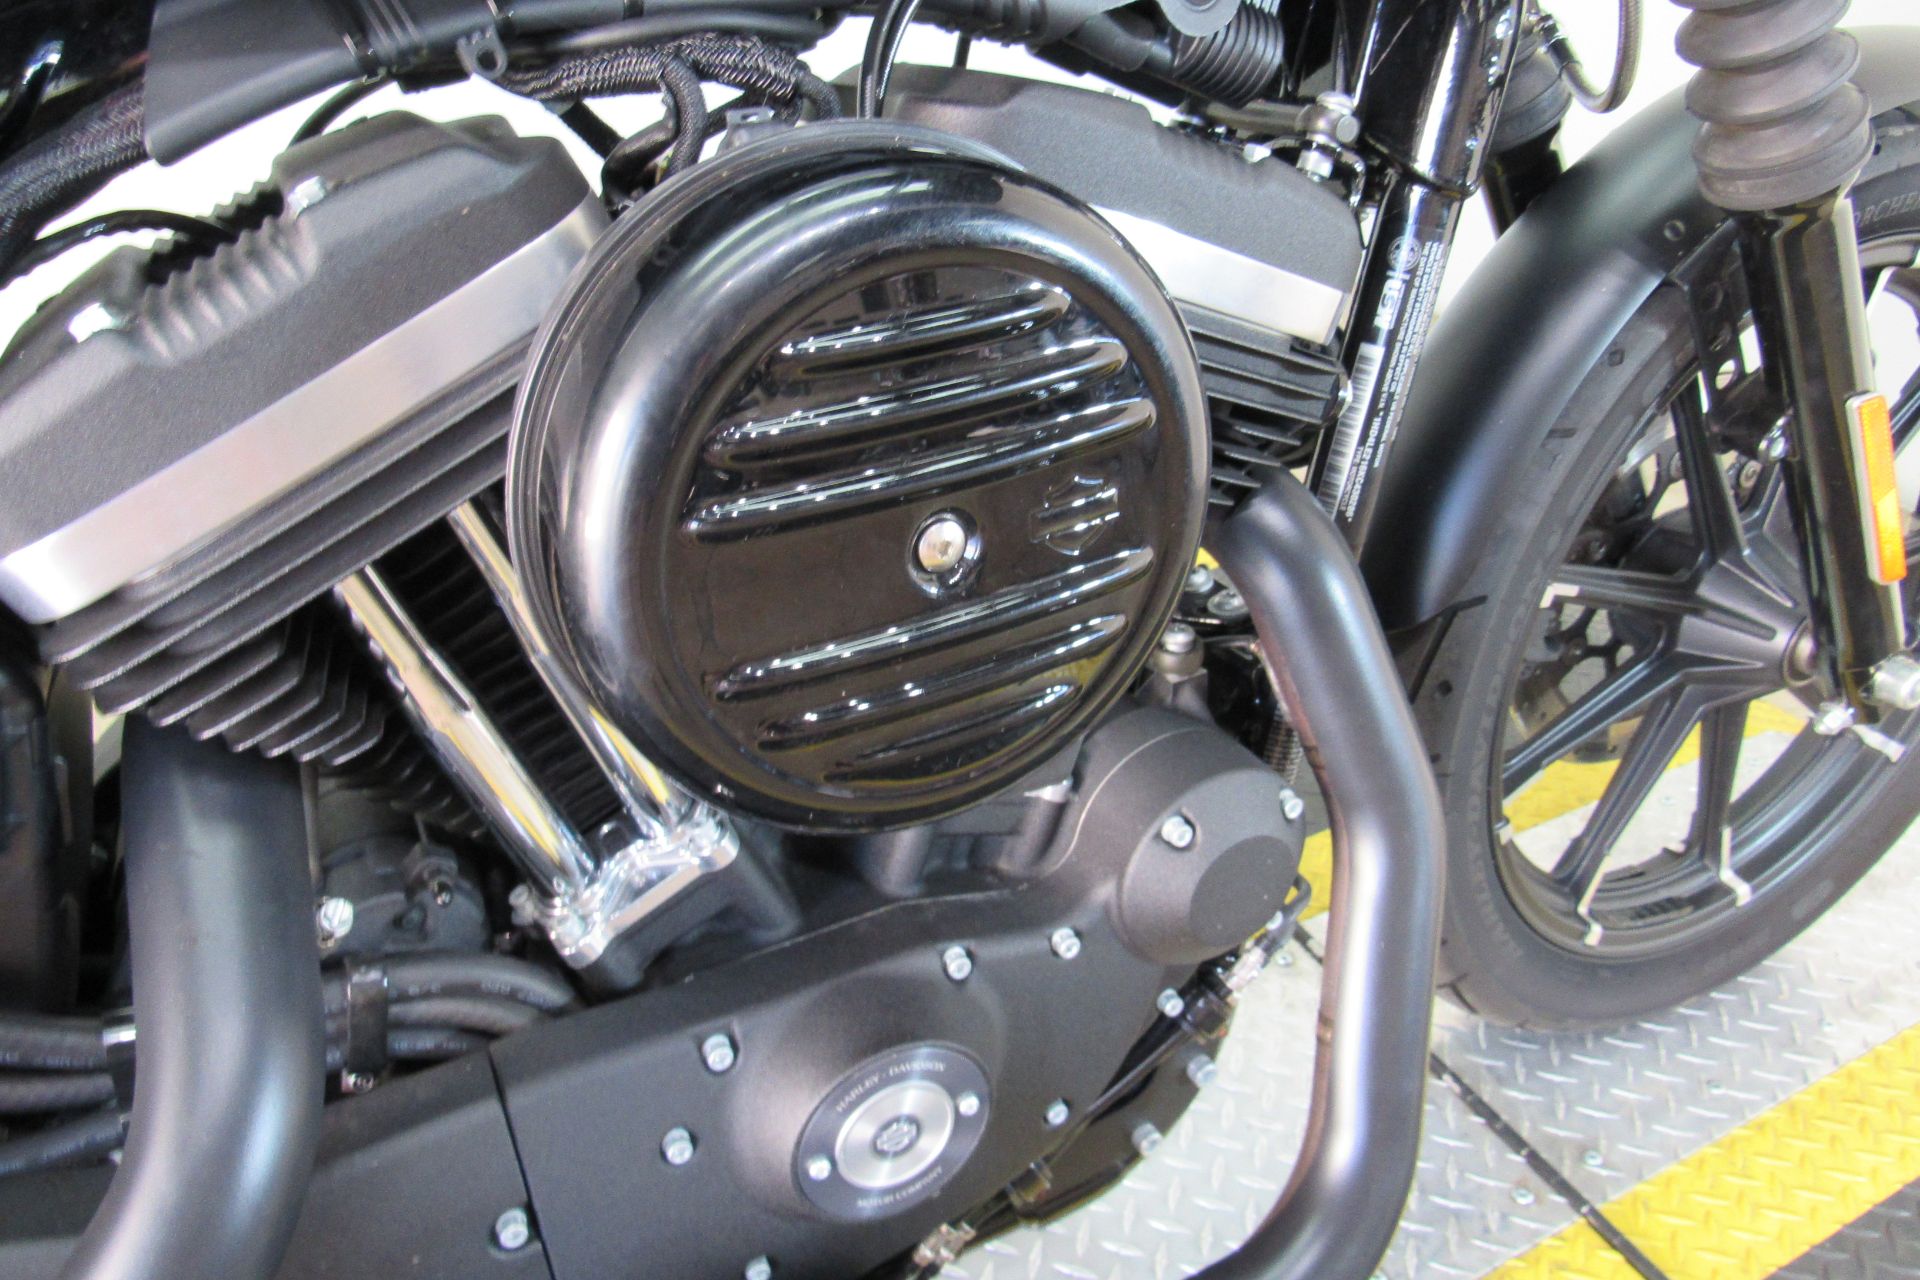 2019 Harley-Davidson Iron 883™ in Temecula, California - Photo 16